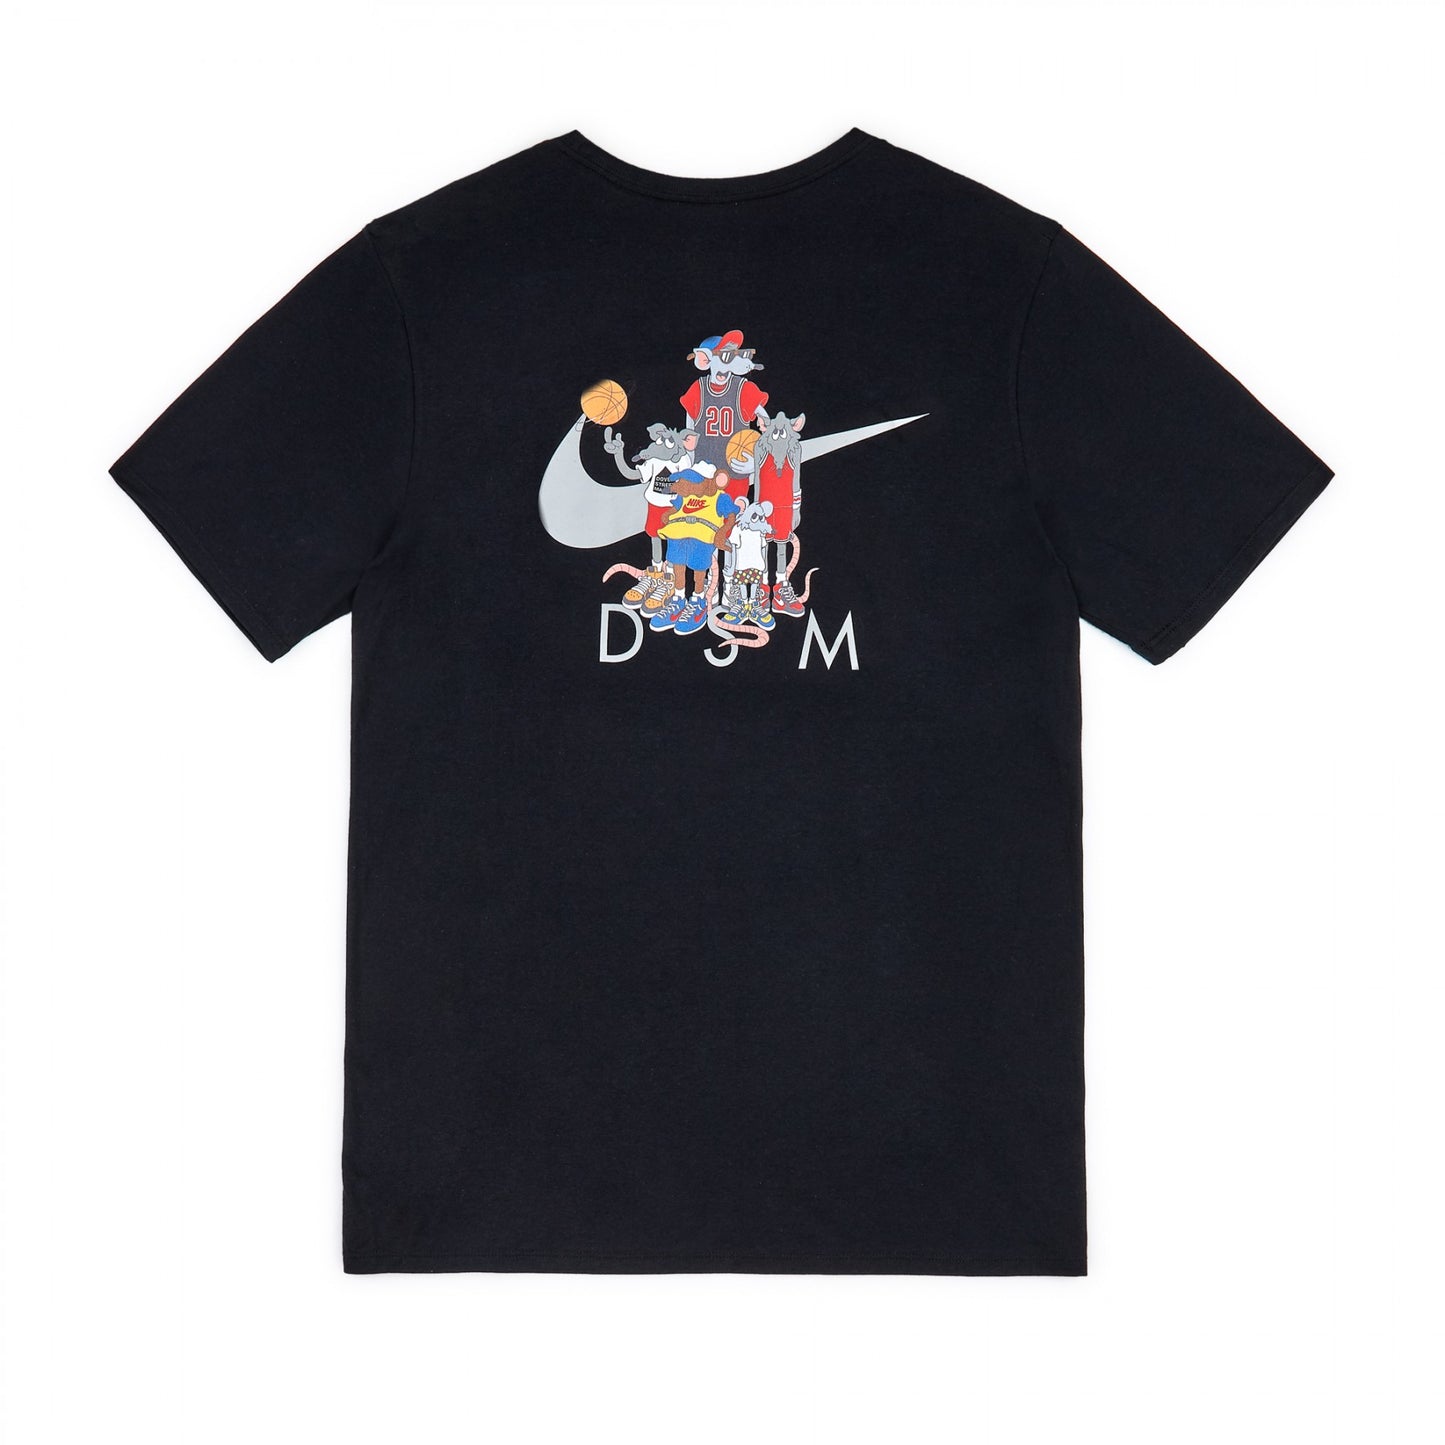 Nike x DSM - Year of the Rat 'Rat Pack' T-Shirt (Black)